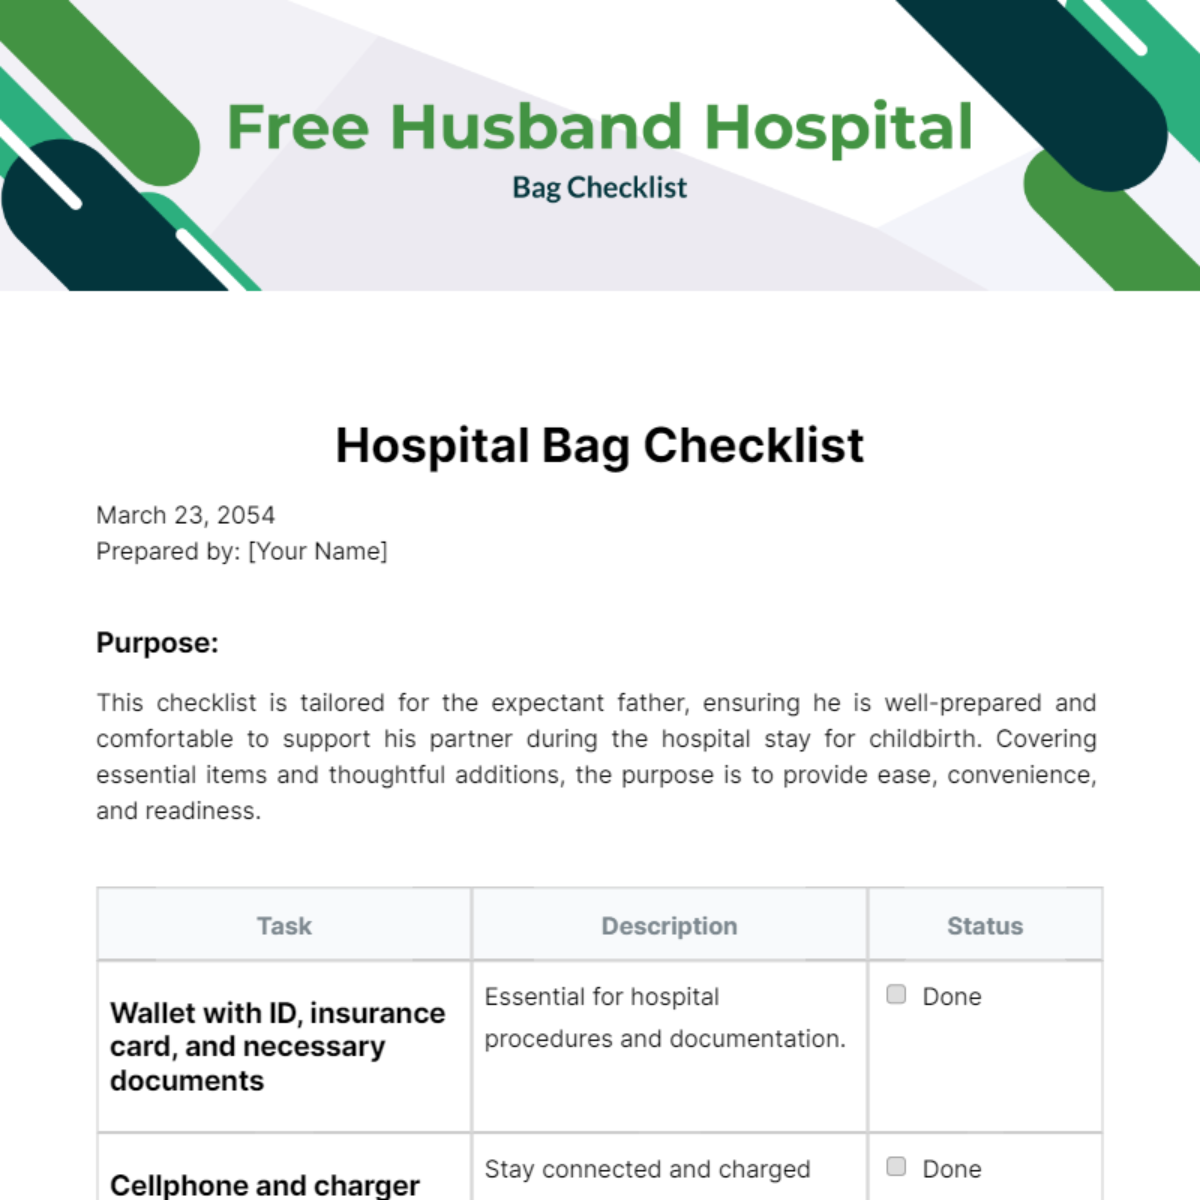 Free Husband Hospital Bag Checklist Template